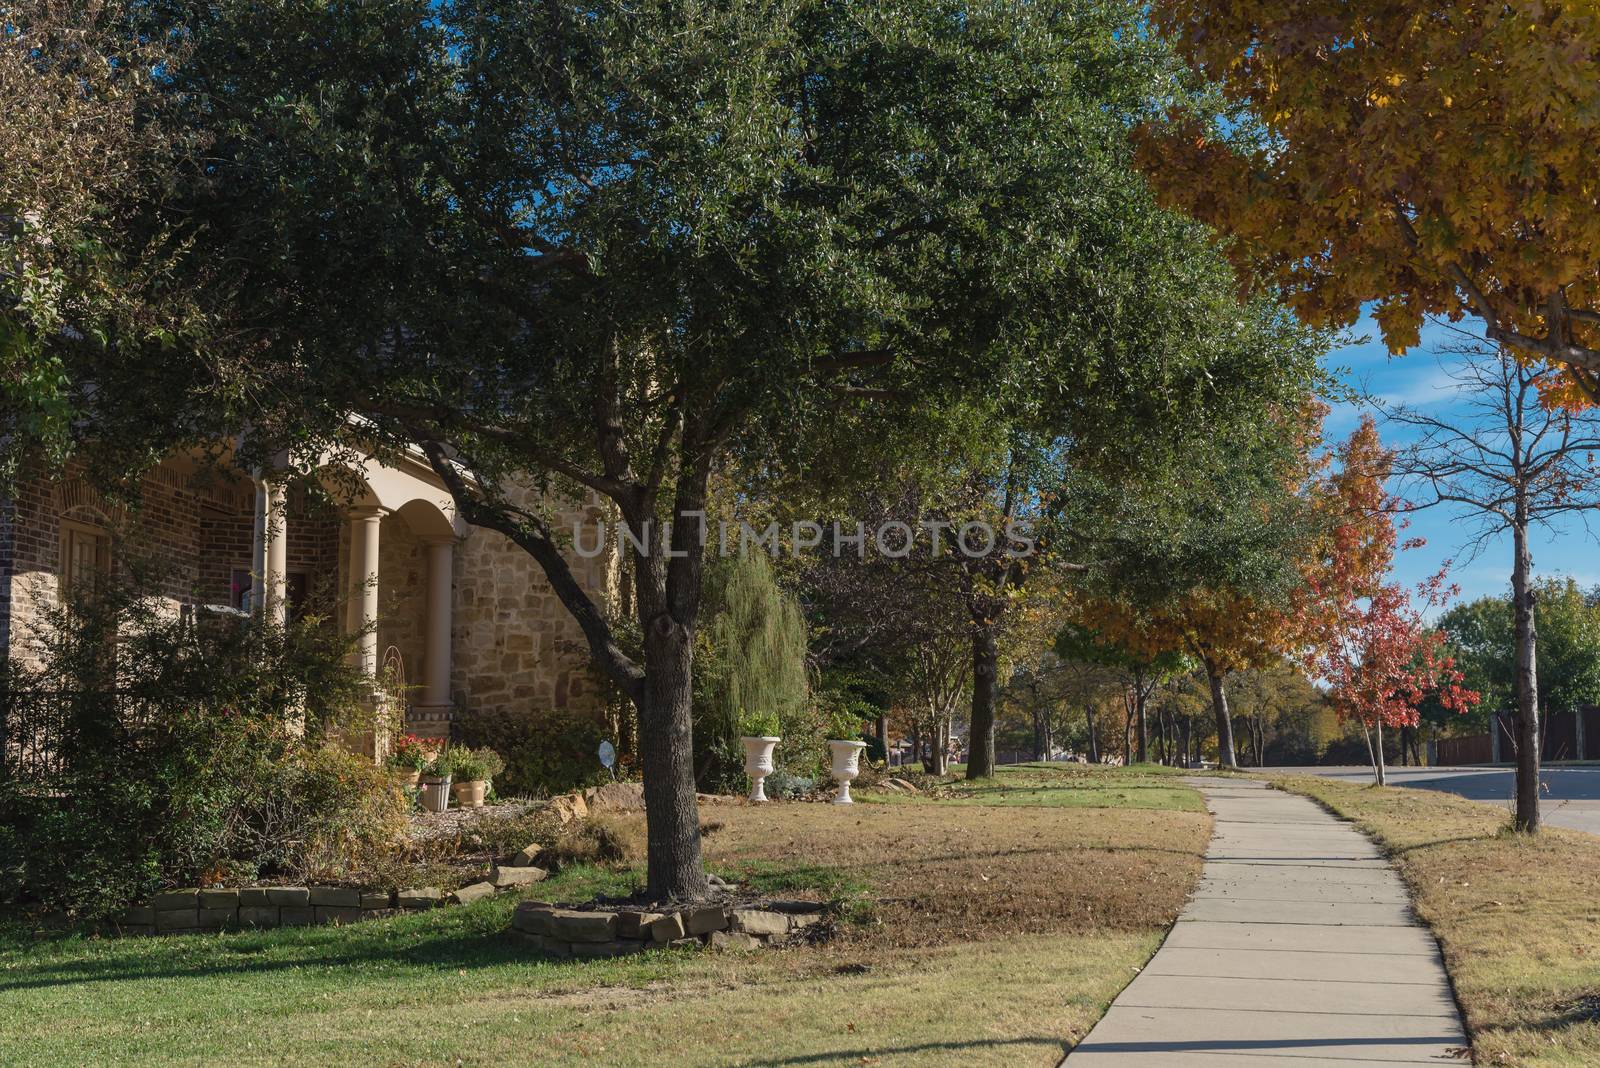 Colorful sidewalk pathway in residential area suburban Dallas, Texas, USA in fall season by trongnguyen